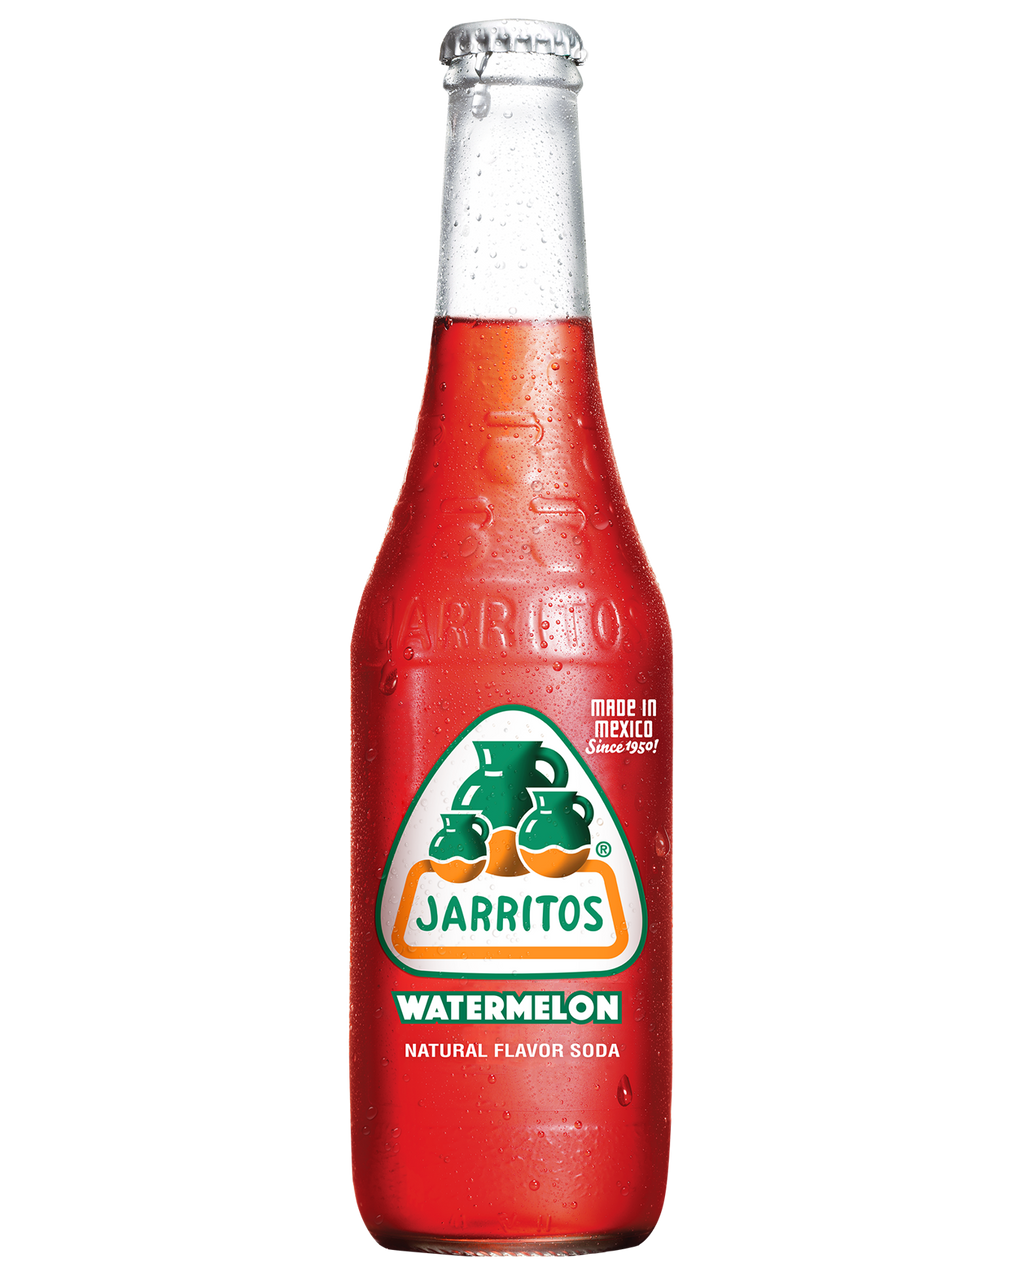 Watermelon Soda Mexican 370ml Glass Bottle x 24 Carton Jarritos